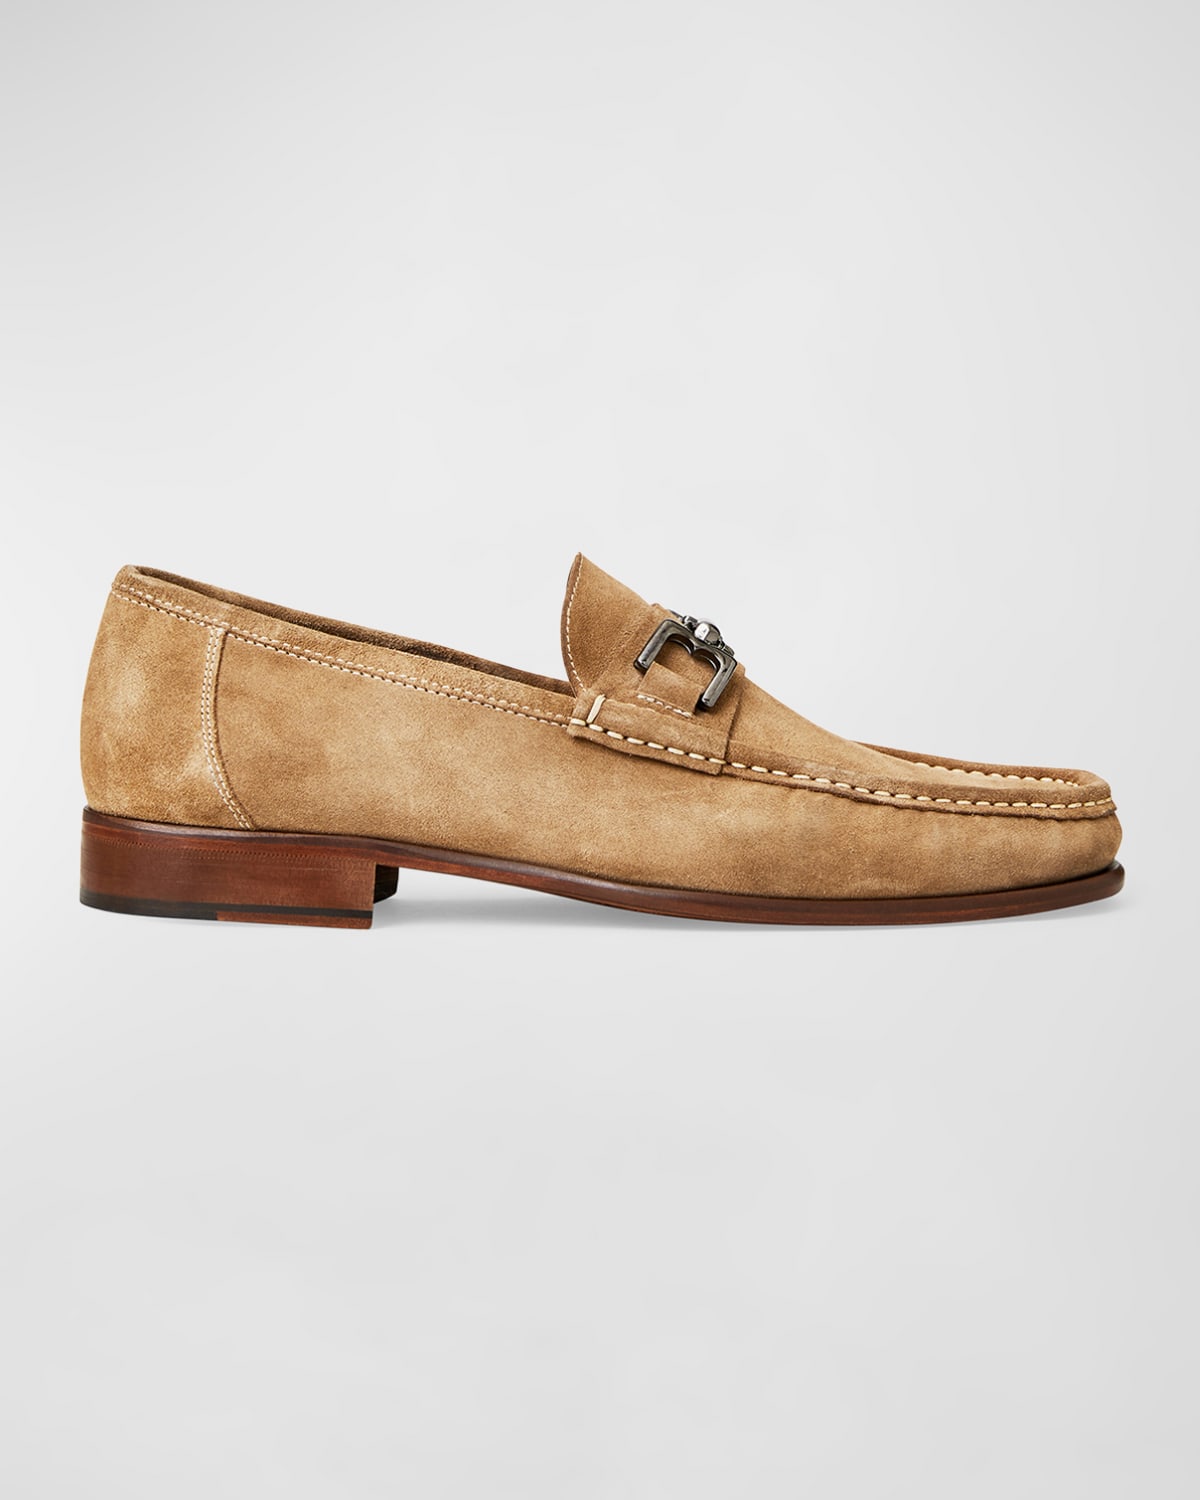 Bruno Magli Men's Trieste Horse-Bit Leather Loafers